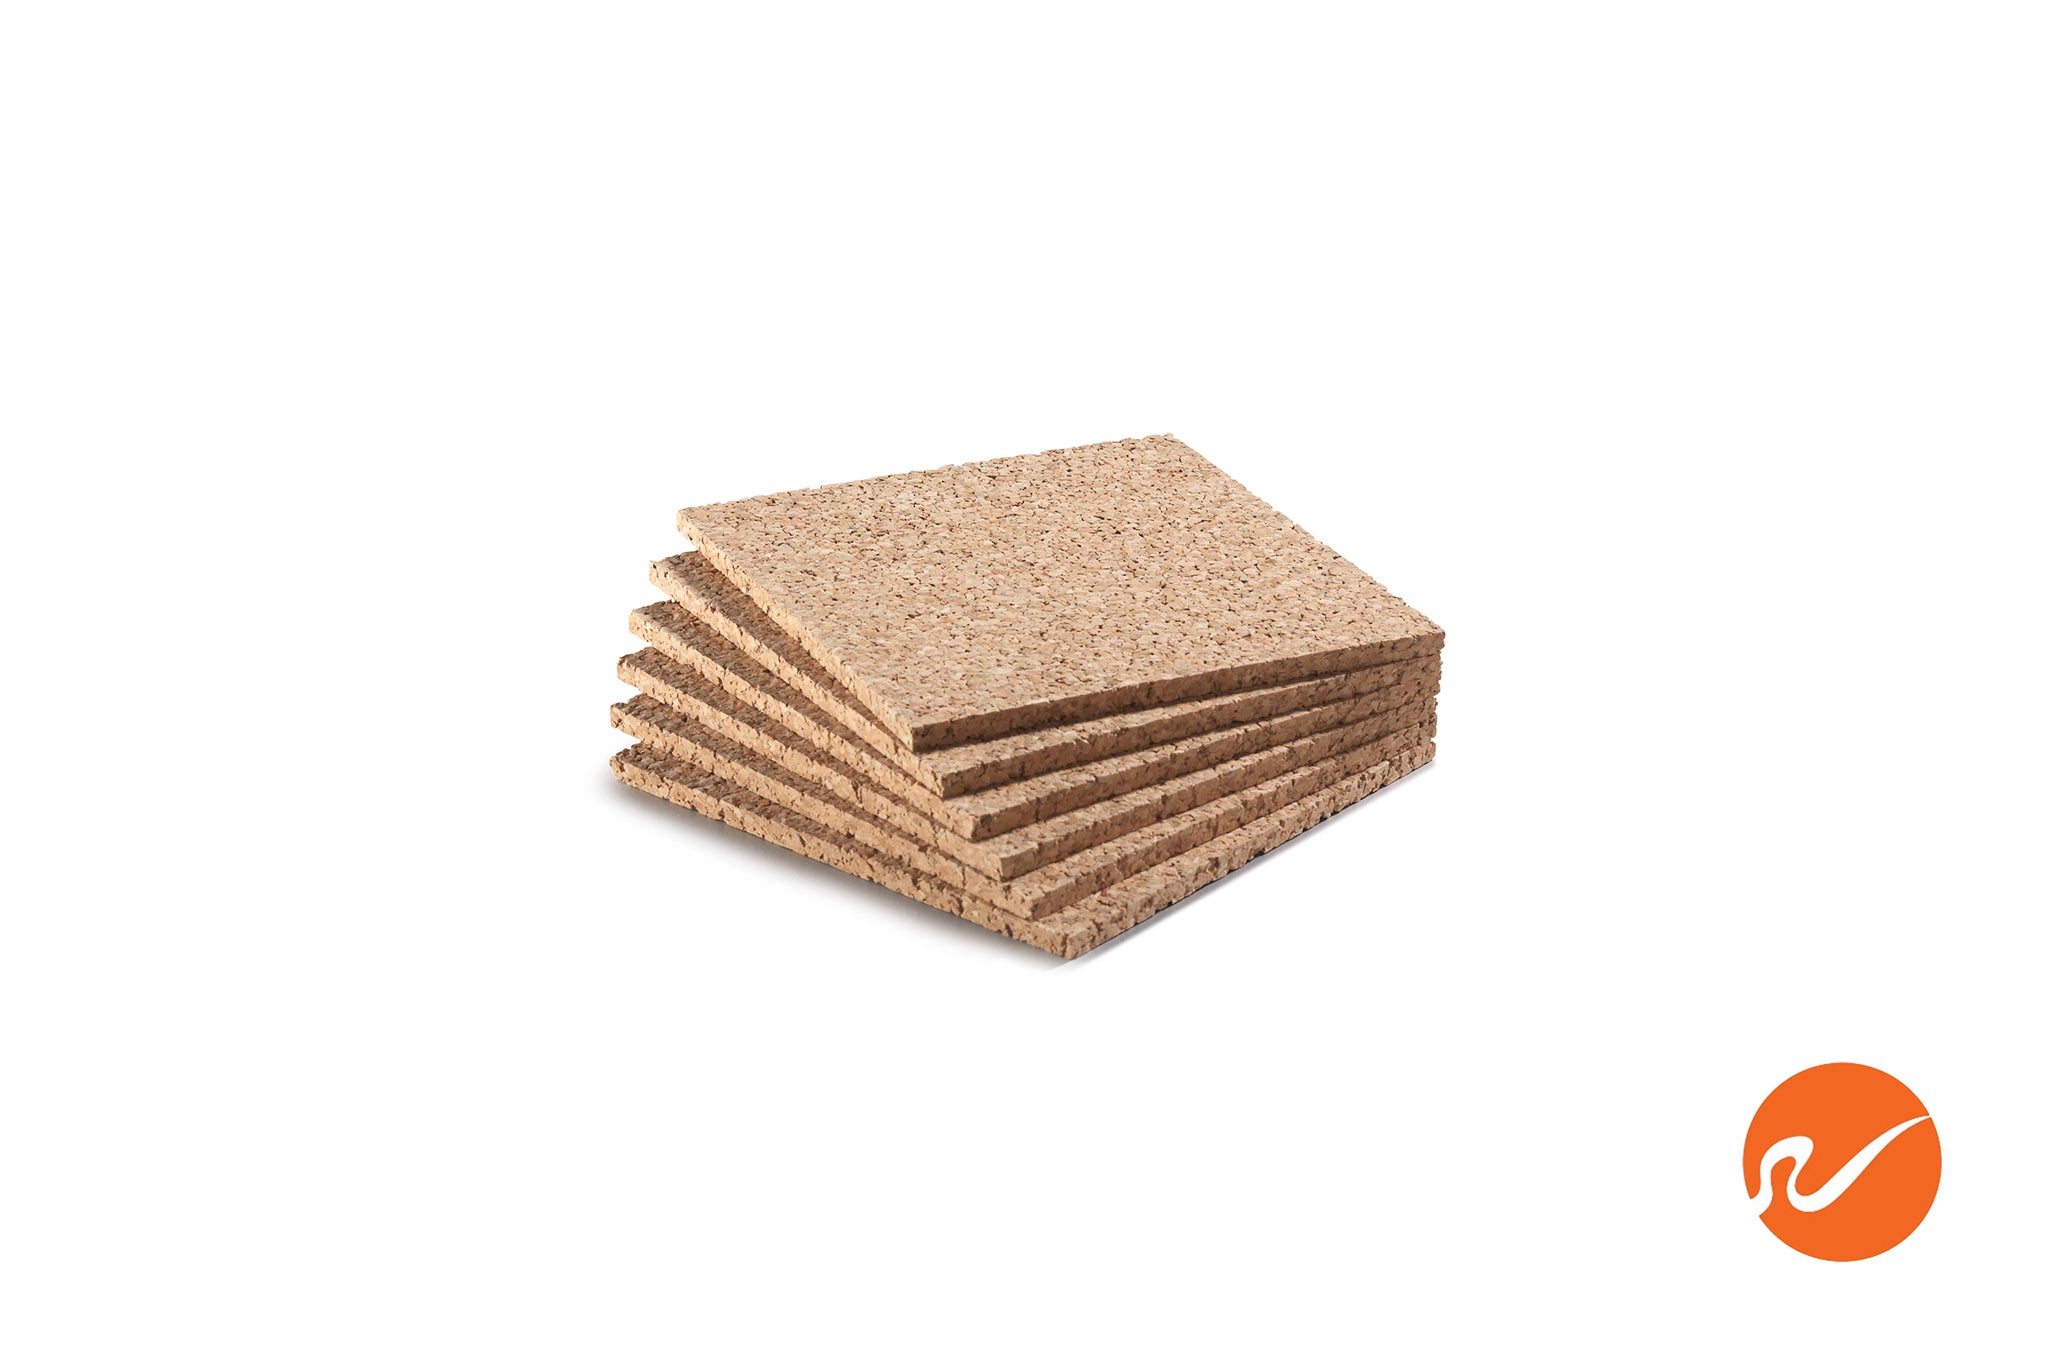 1/4 x 6 Cork Squares - buy cork pads, trivets